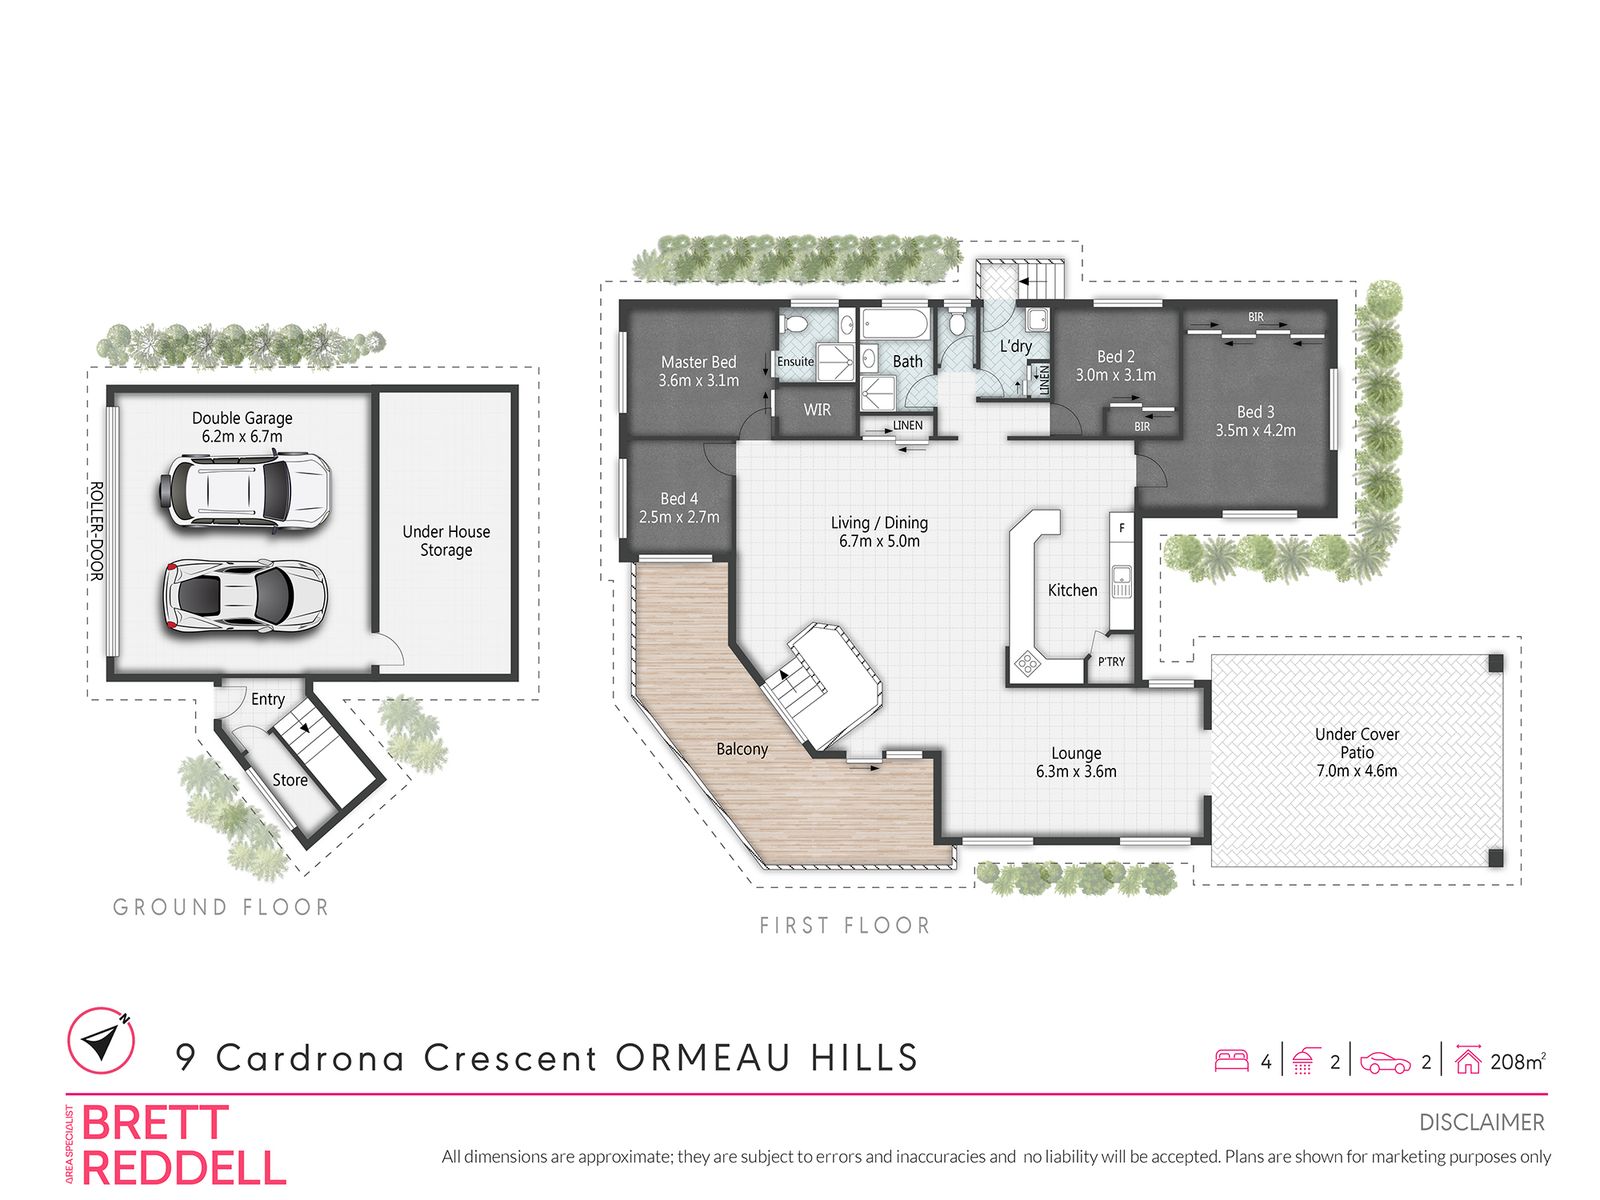 9 Cardrona Crescent, Ormeau Hills